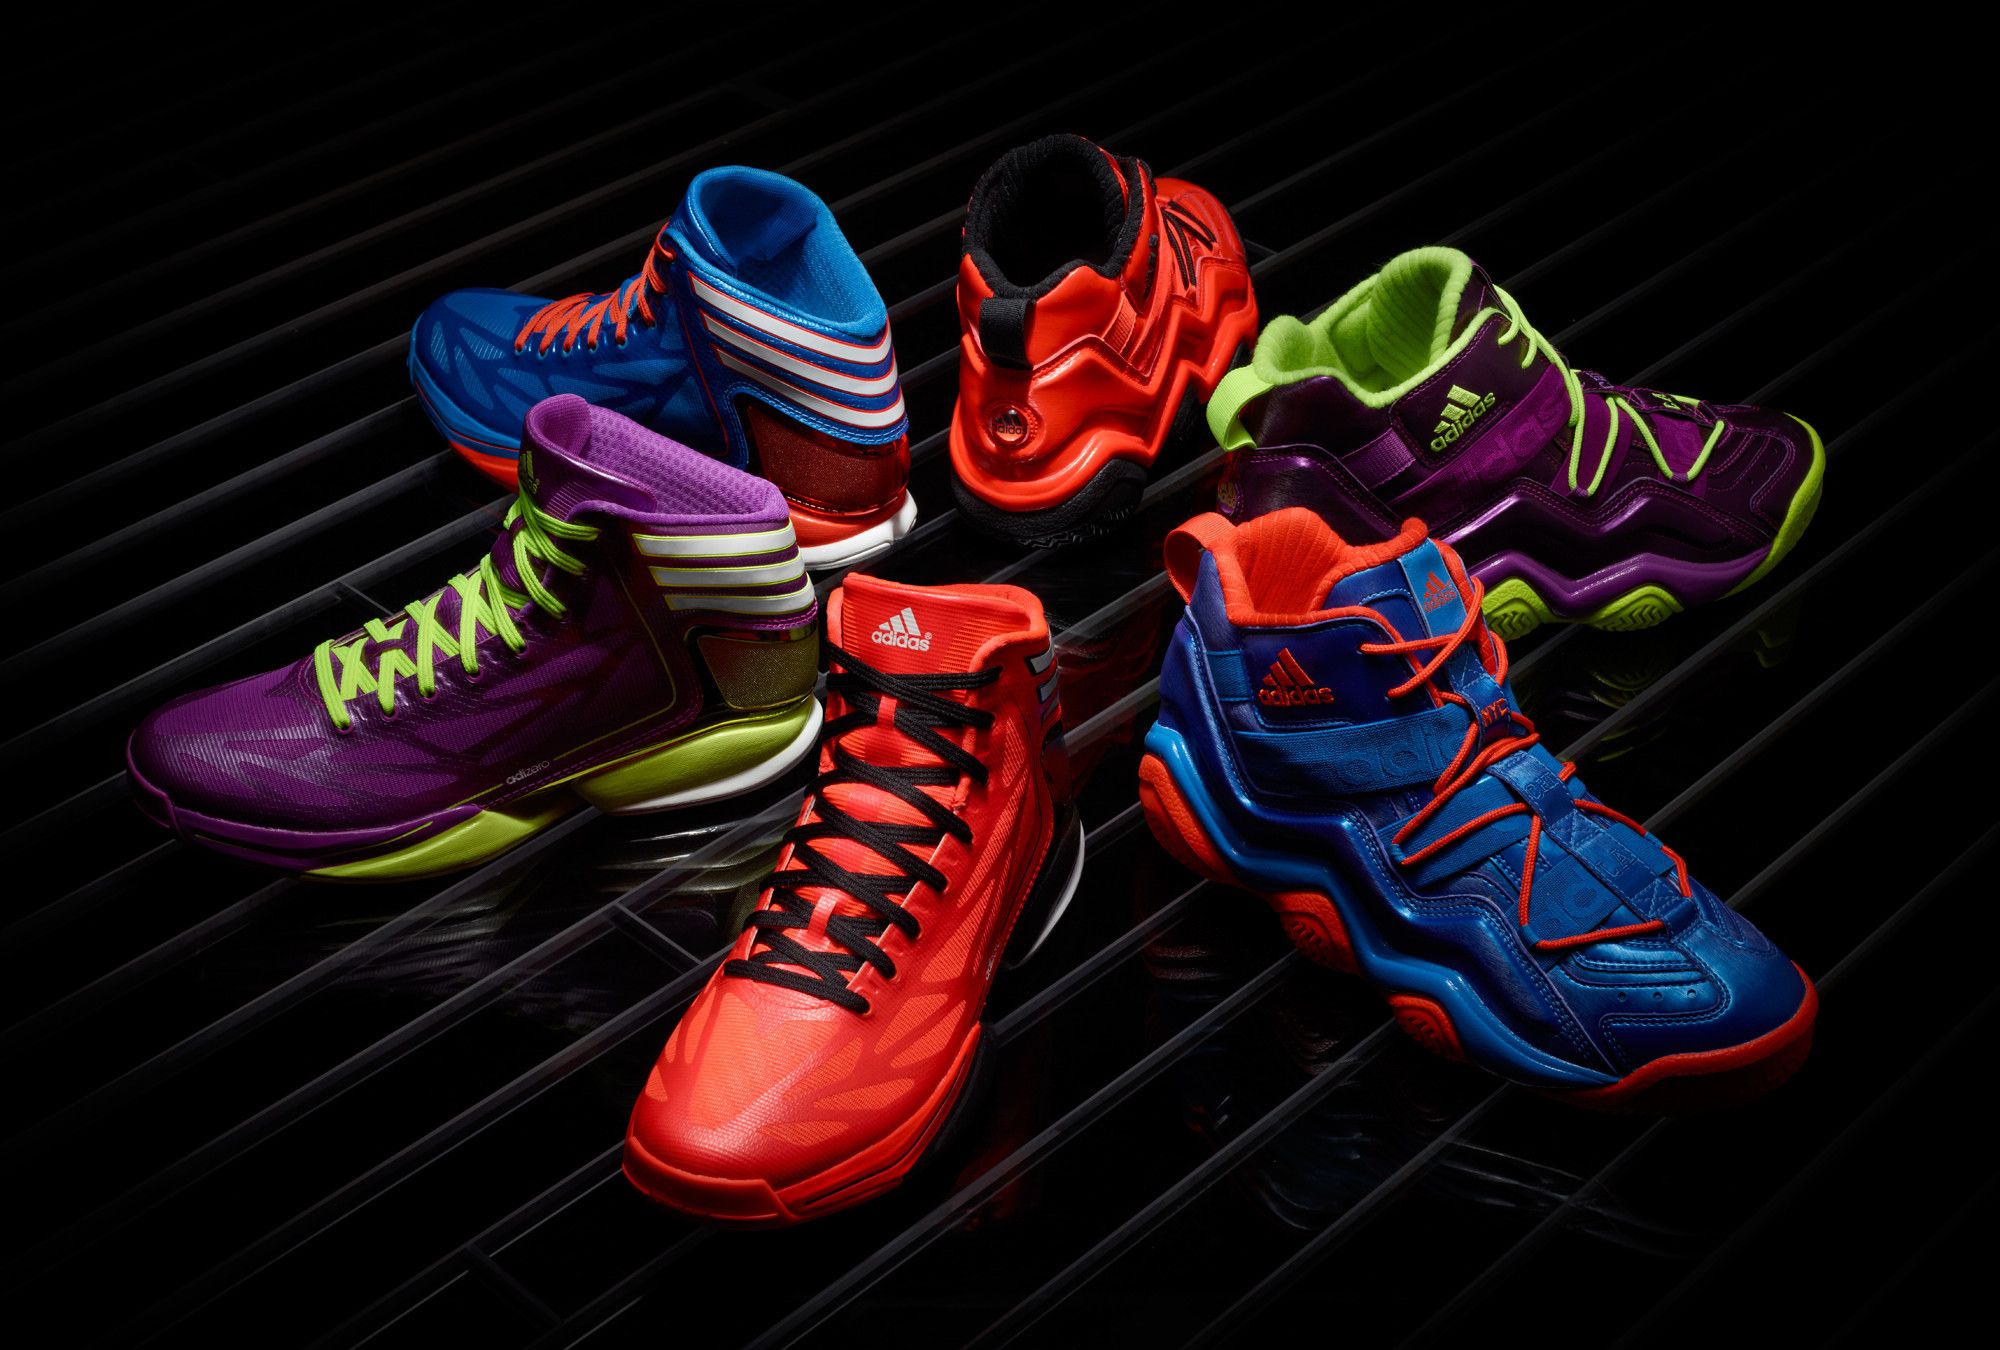 Adidas Basketball Shoes Wallpaper